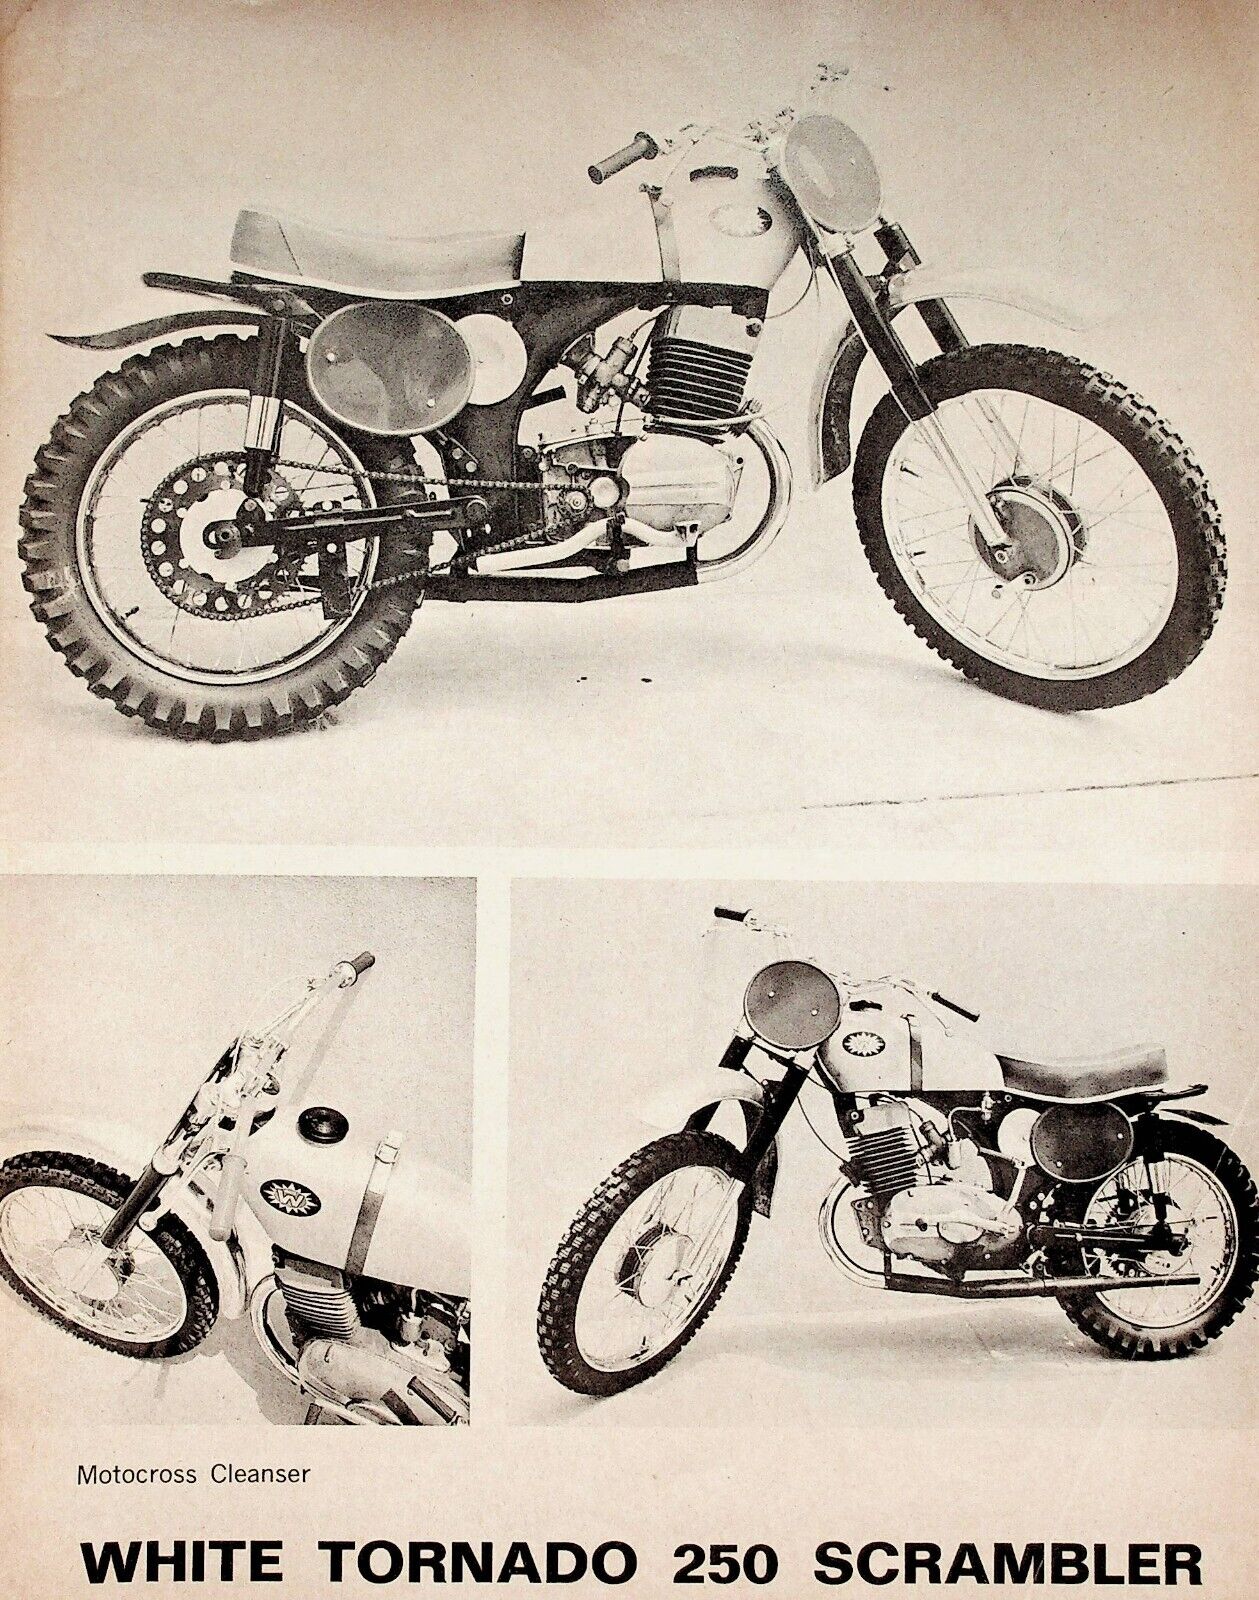 1966 White Tornado 250 Scrambler - 4-Page Vintage Motorcycle Road Test Article